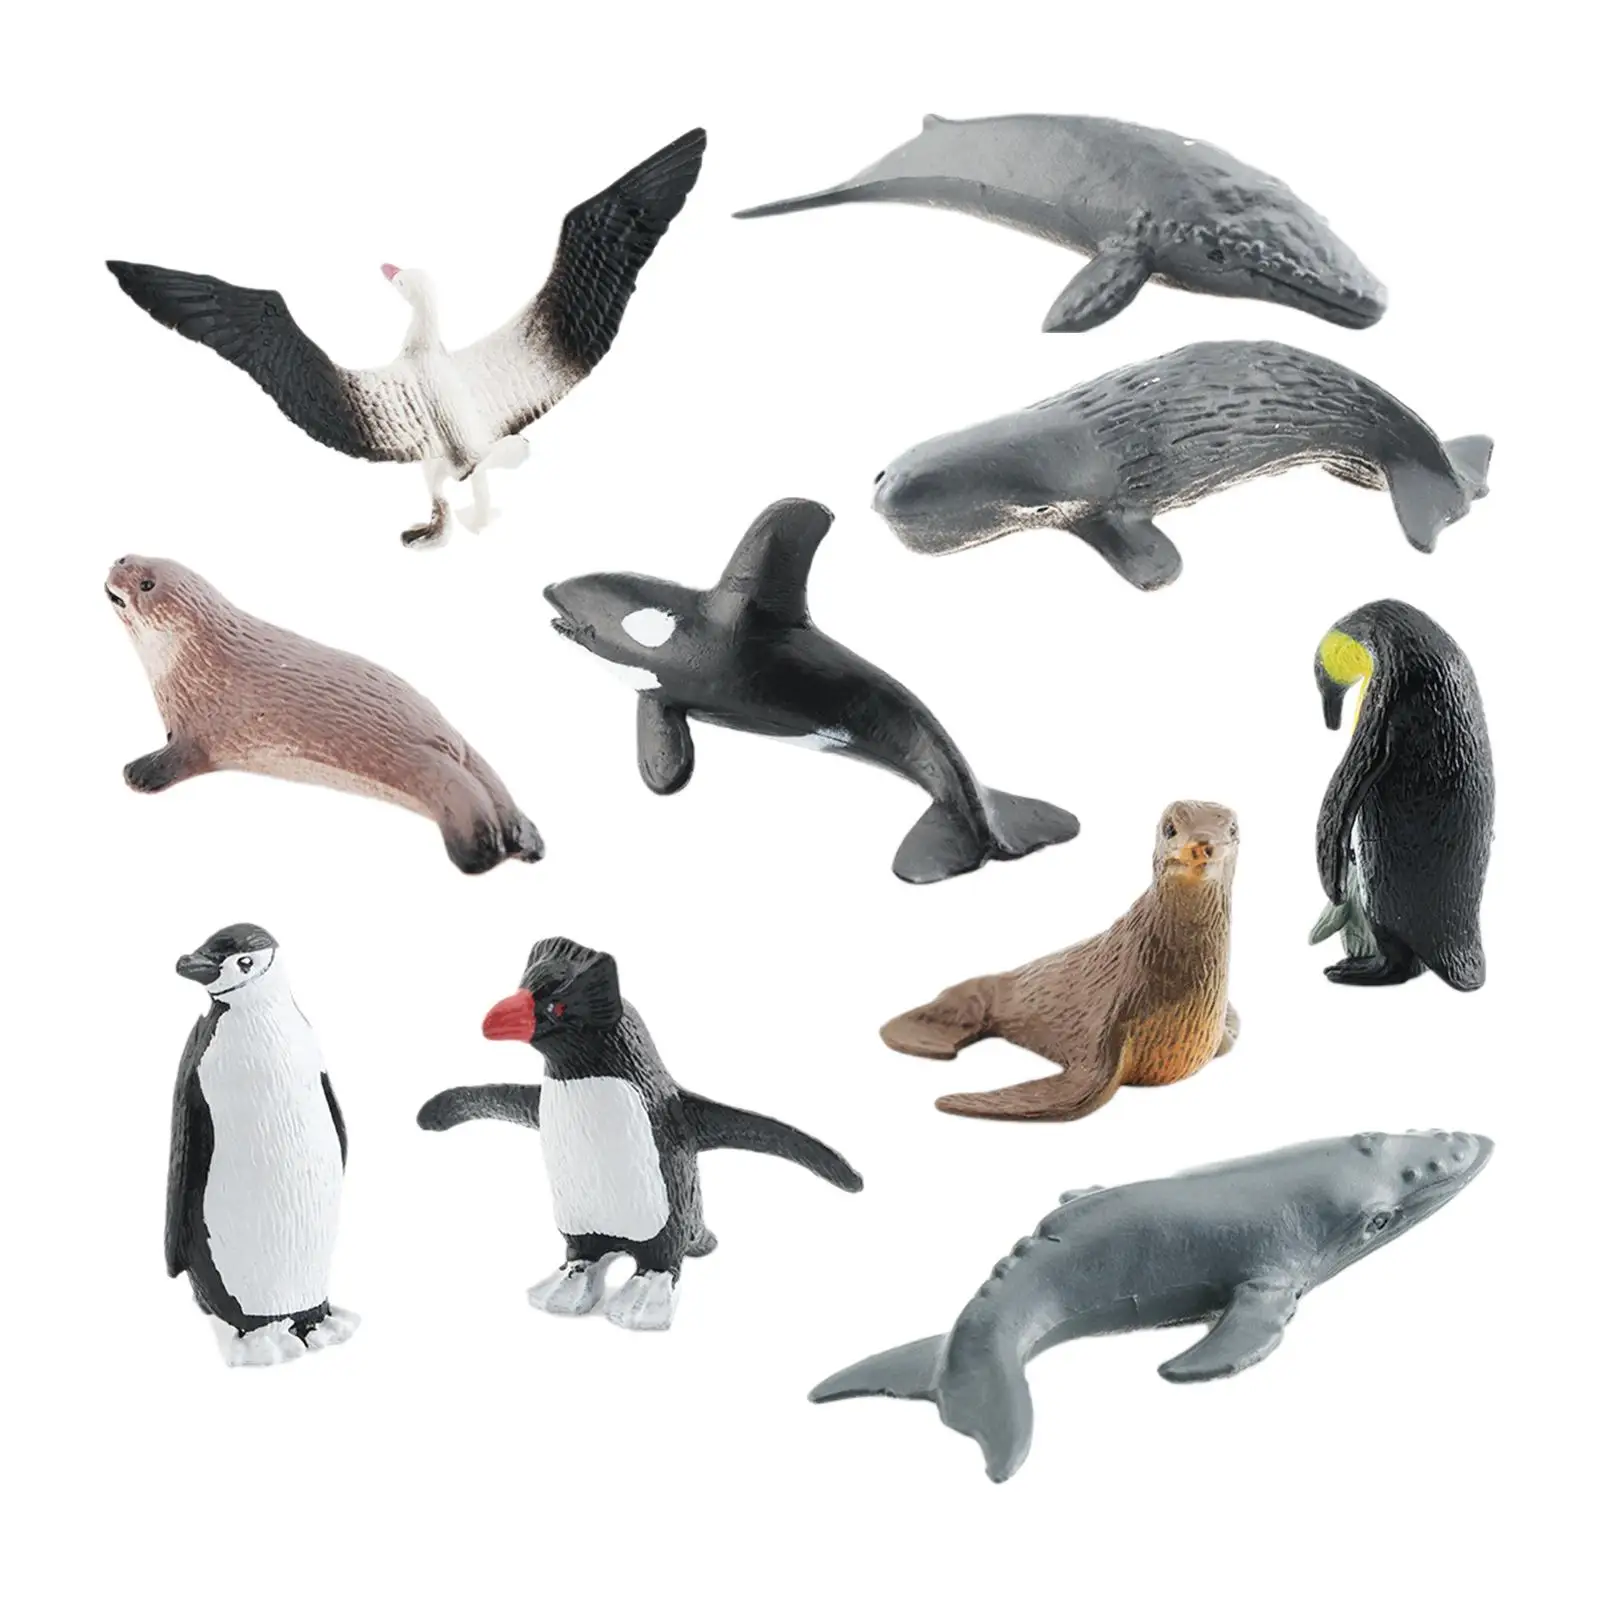 10 Pieces Antarctic Marine Animals Miniatures for Desktop Decor Party Favors